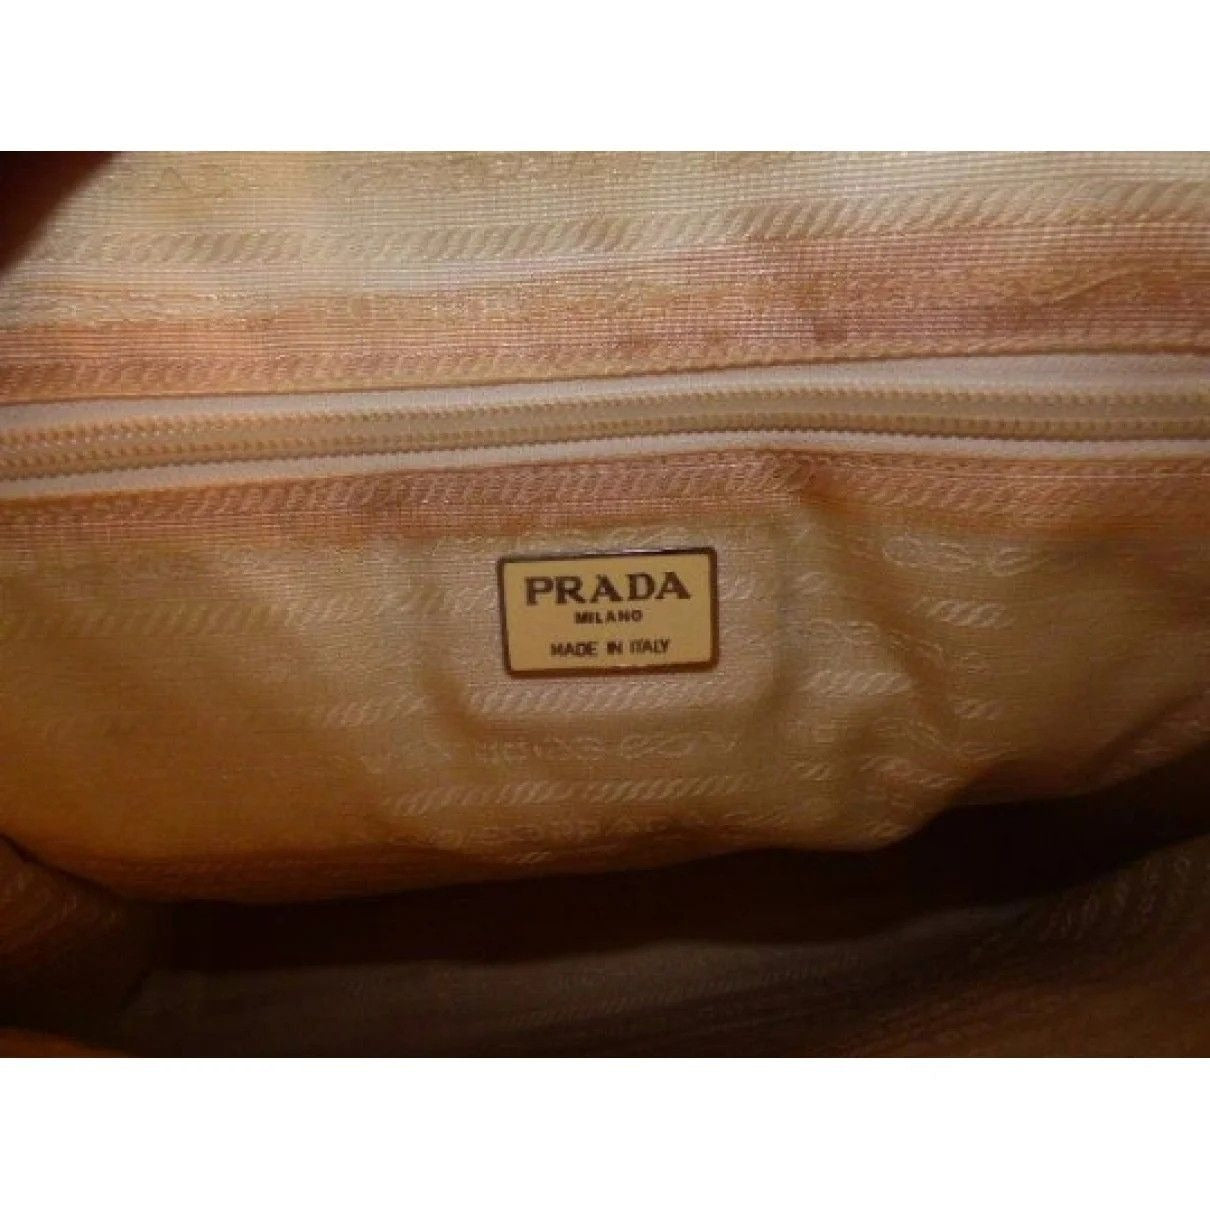 Prada, ivory patent leather, retro, plus size, gorgeous, satchel with two longer handles